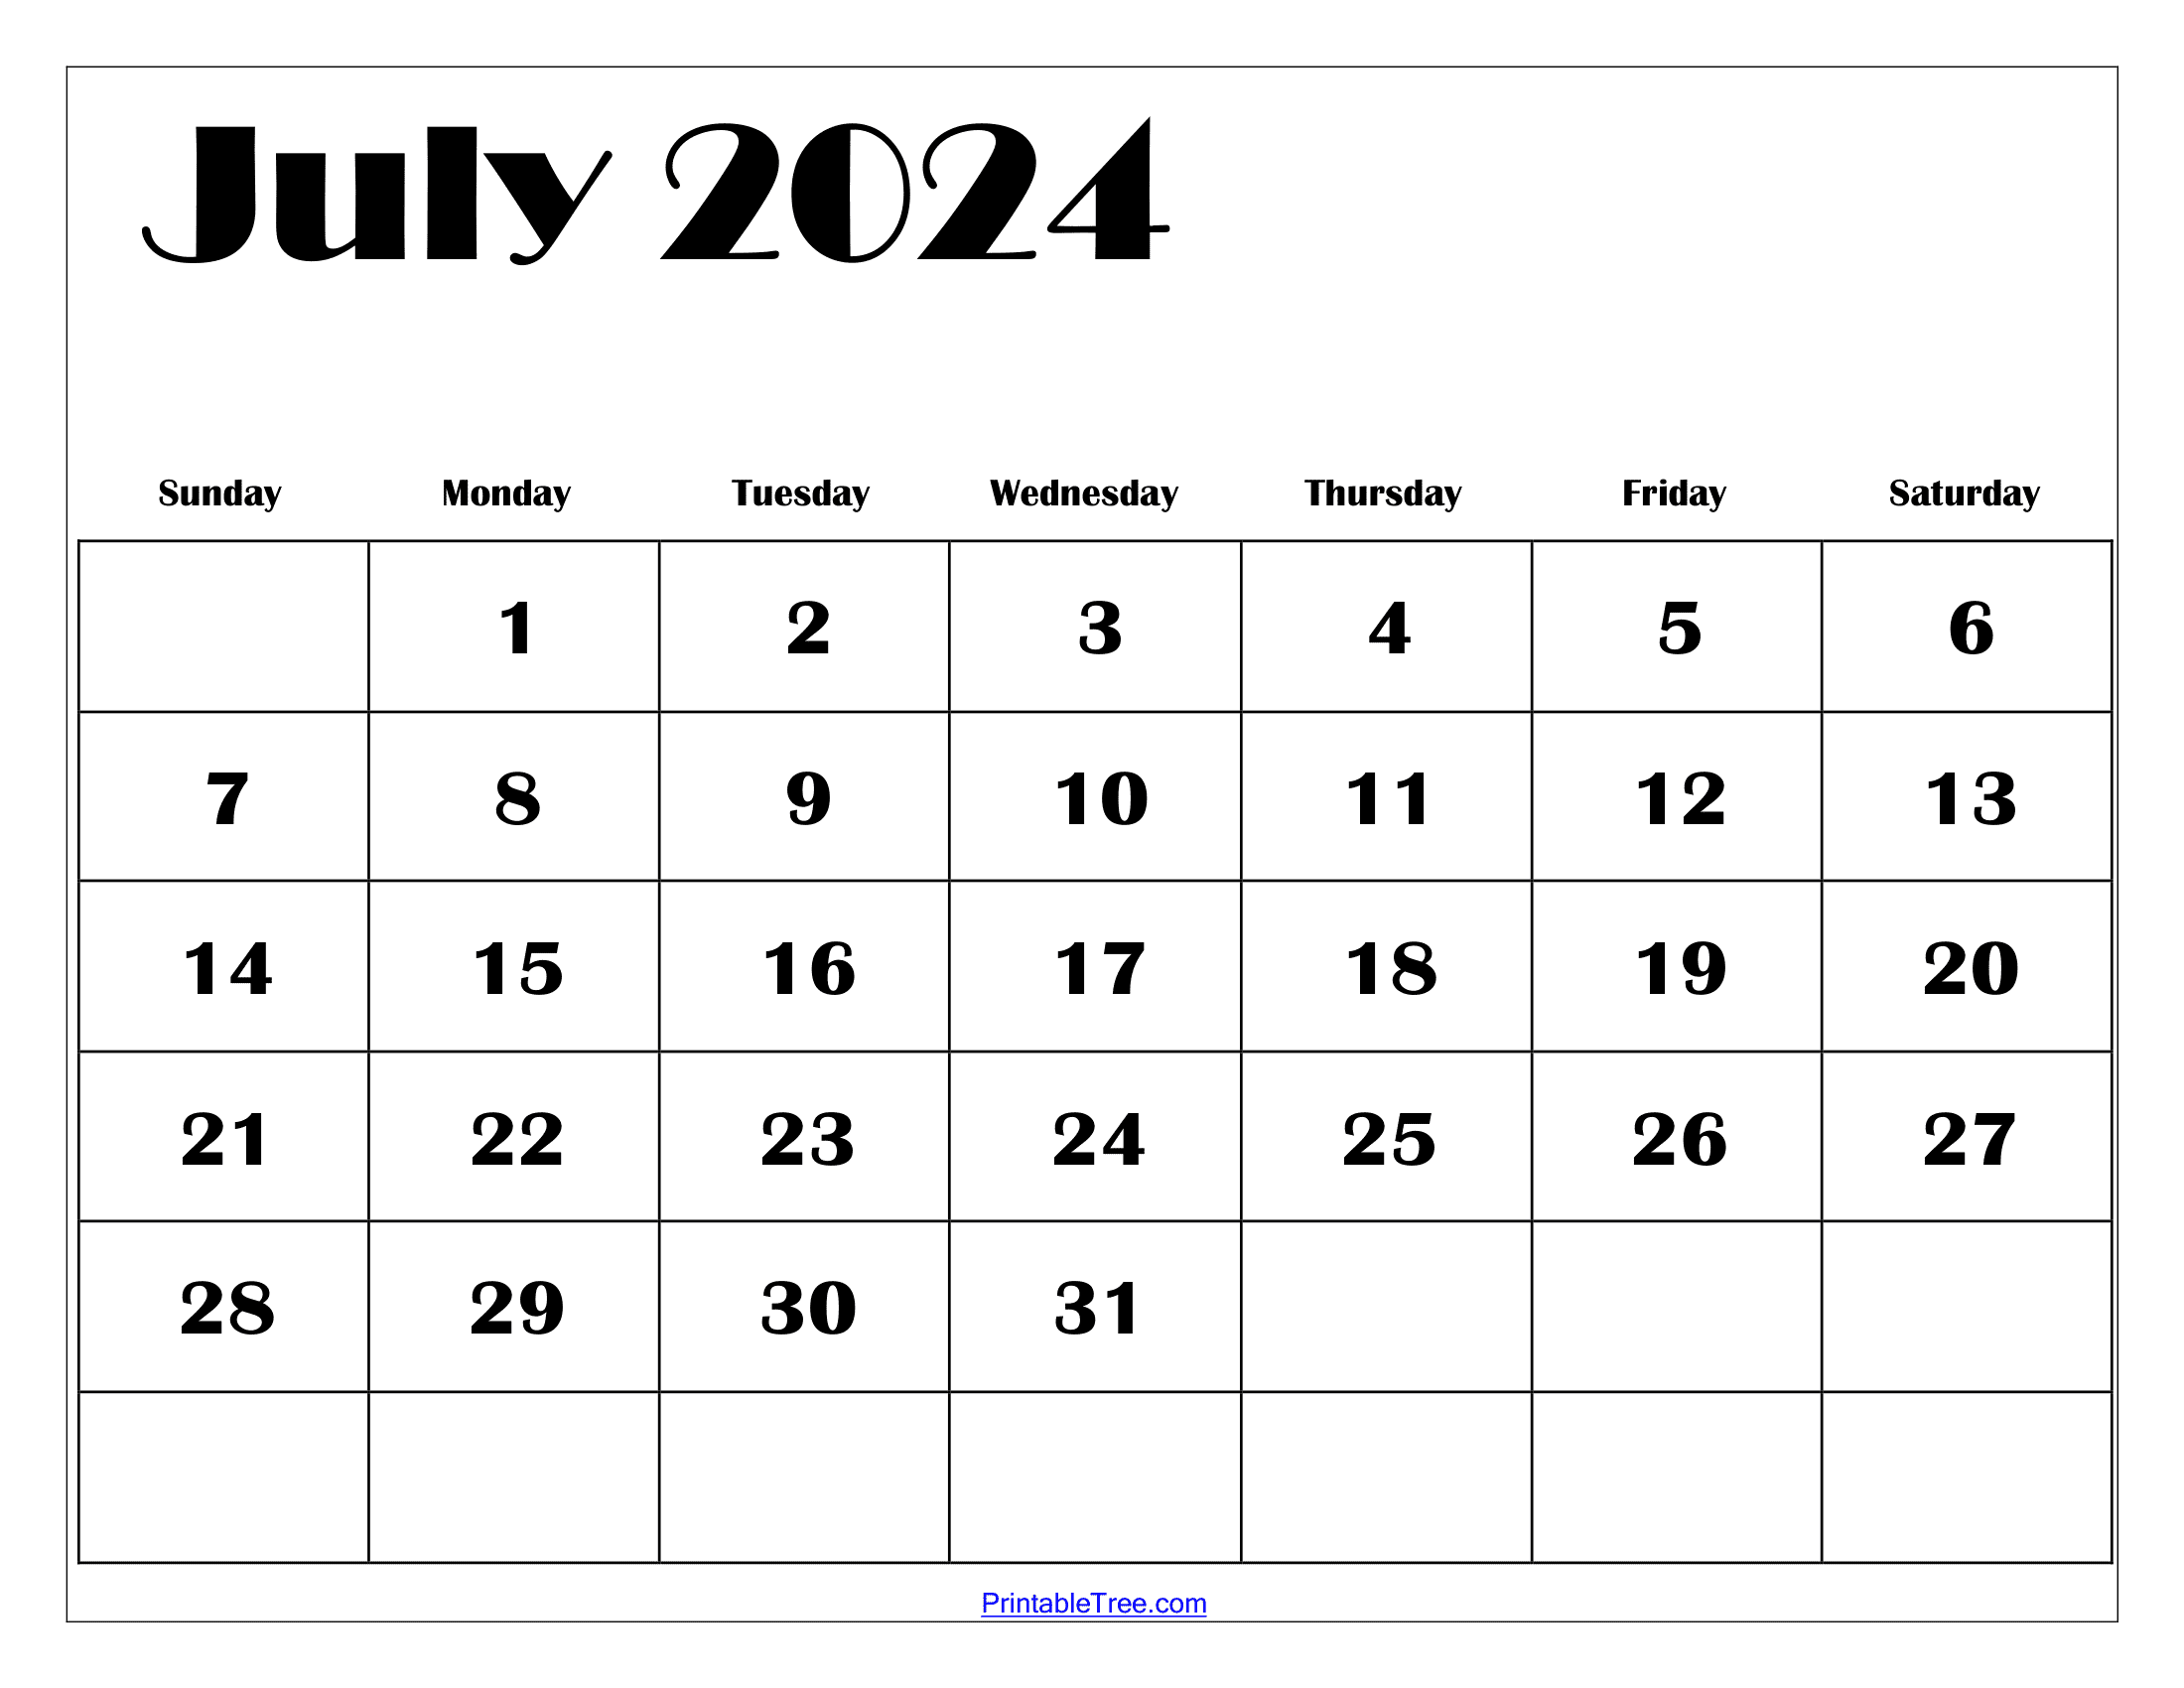 July 2024 Calendar Printable Pdf With Holidays Free Template for Calendar July 2024 Free Printable